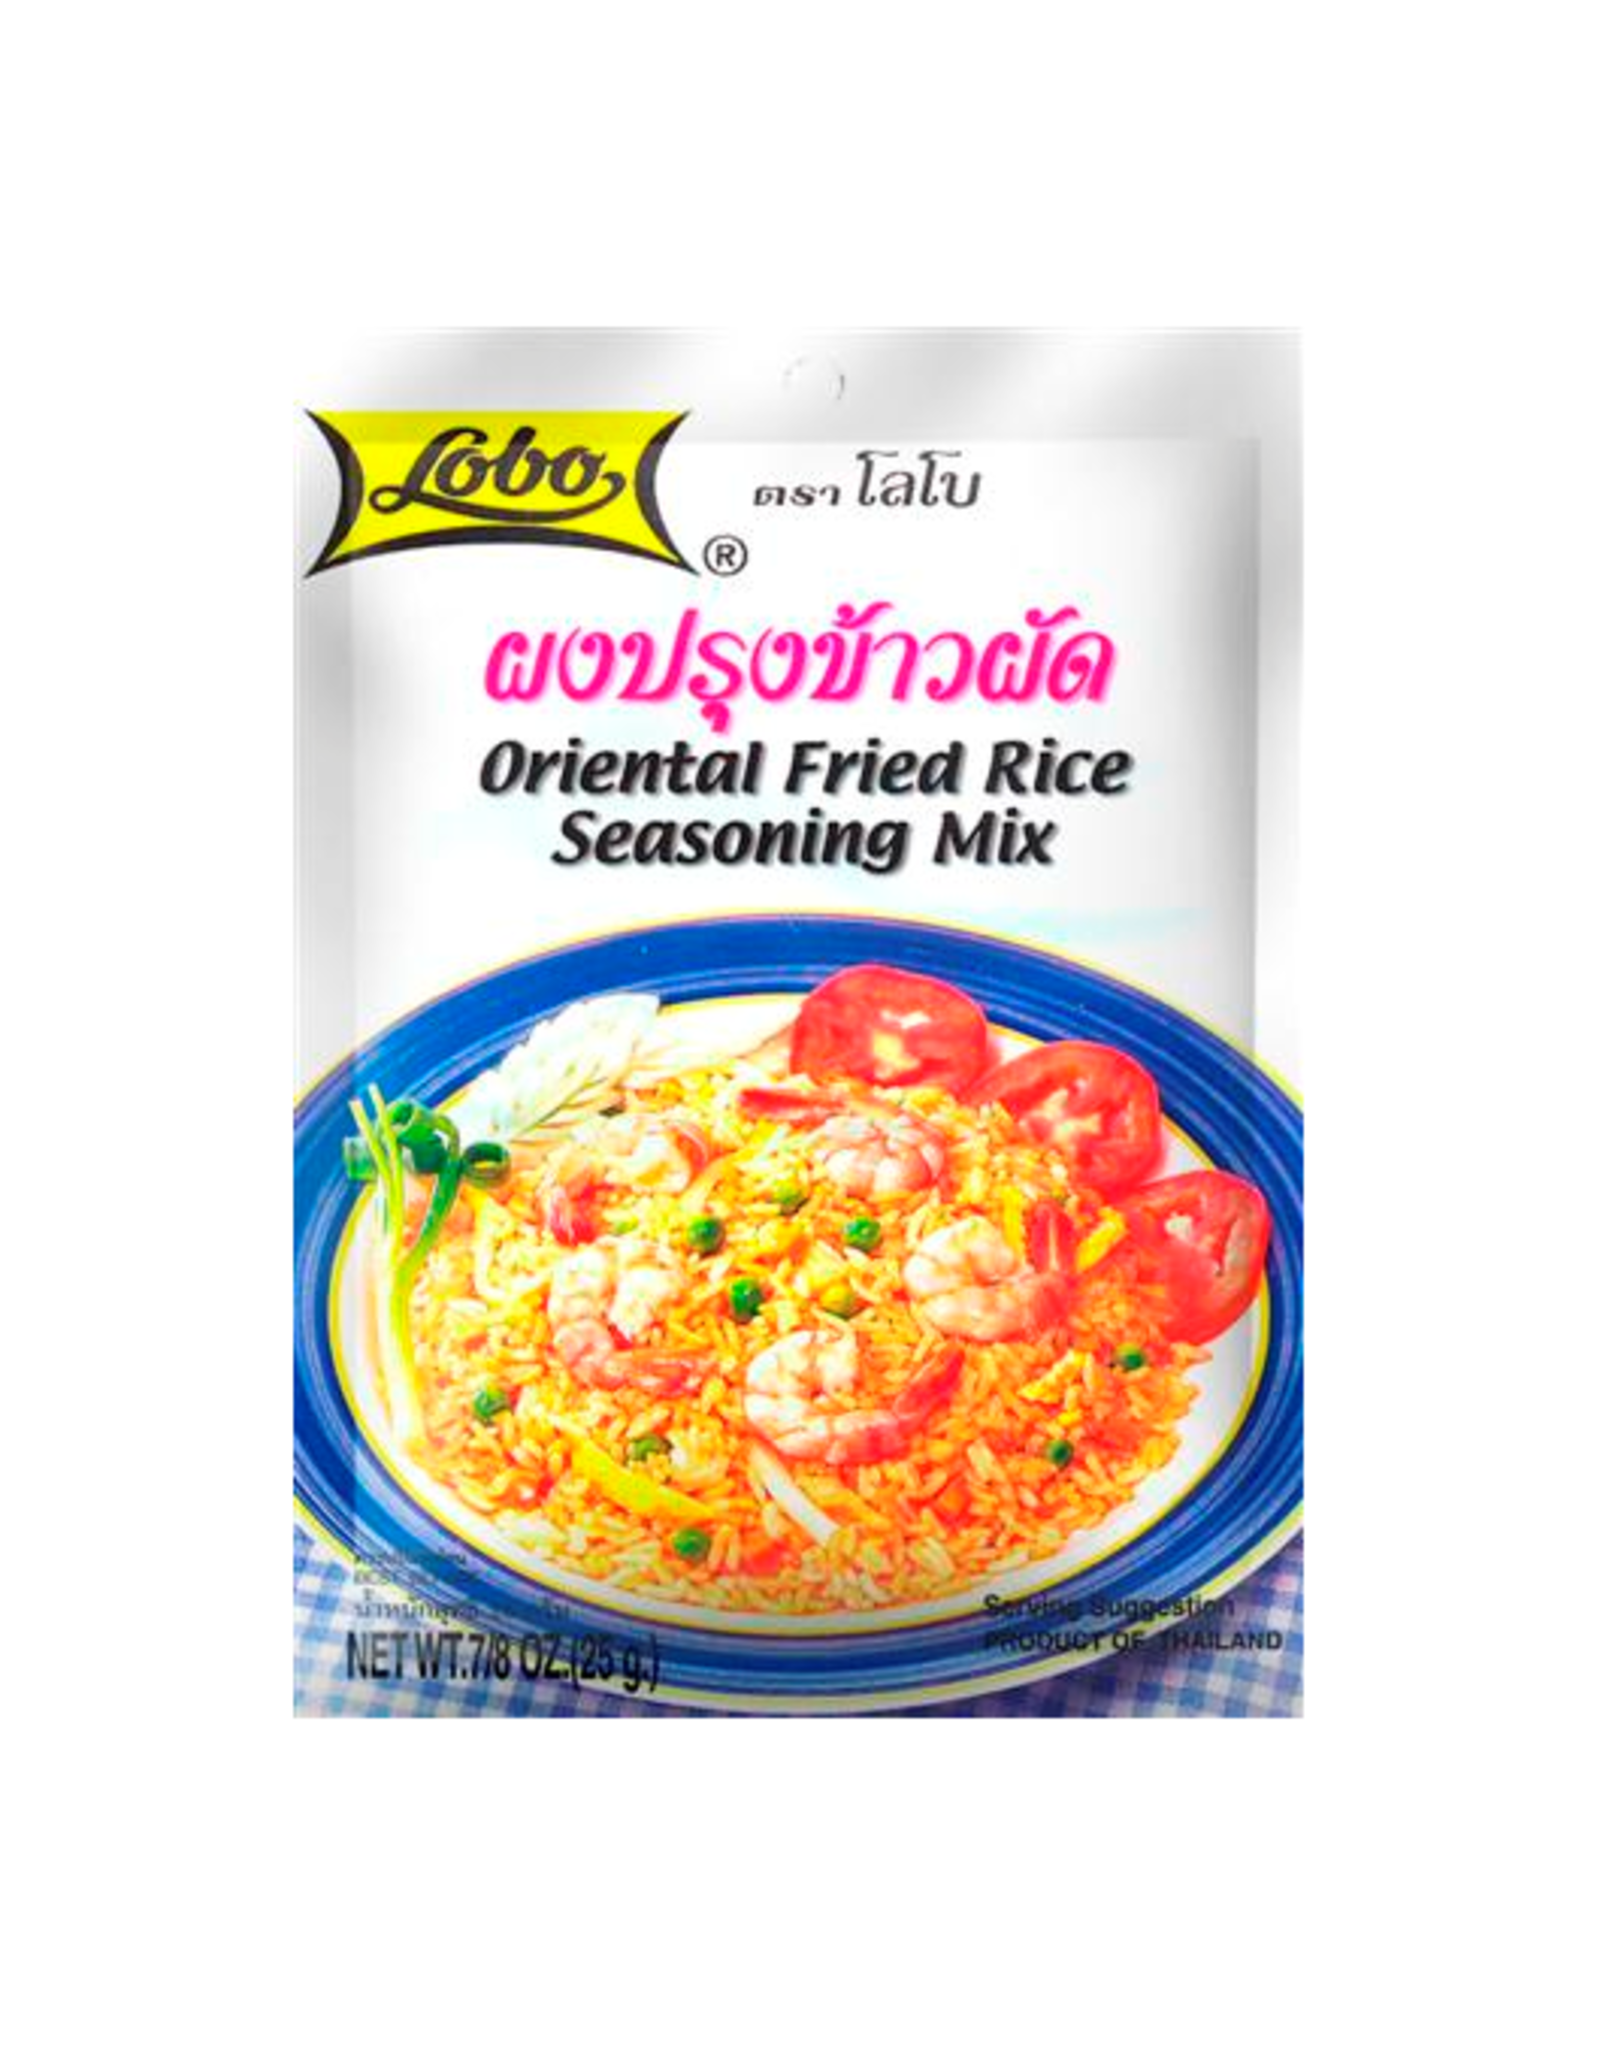 Lobo Oriental Fried Rice Seasoning Mix